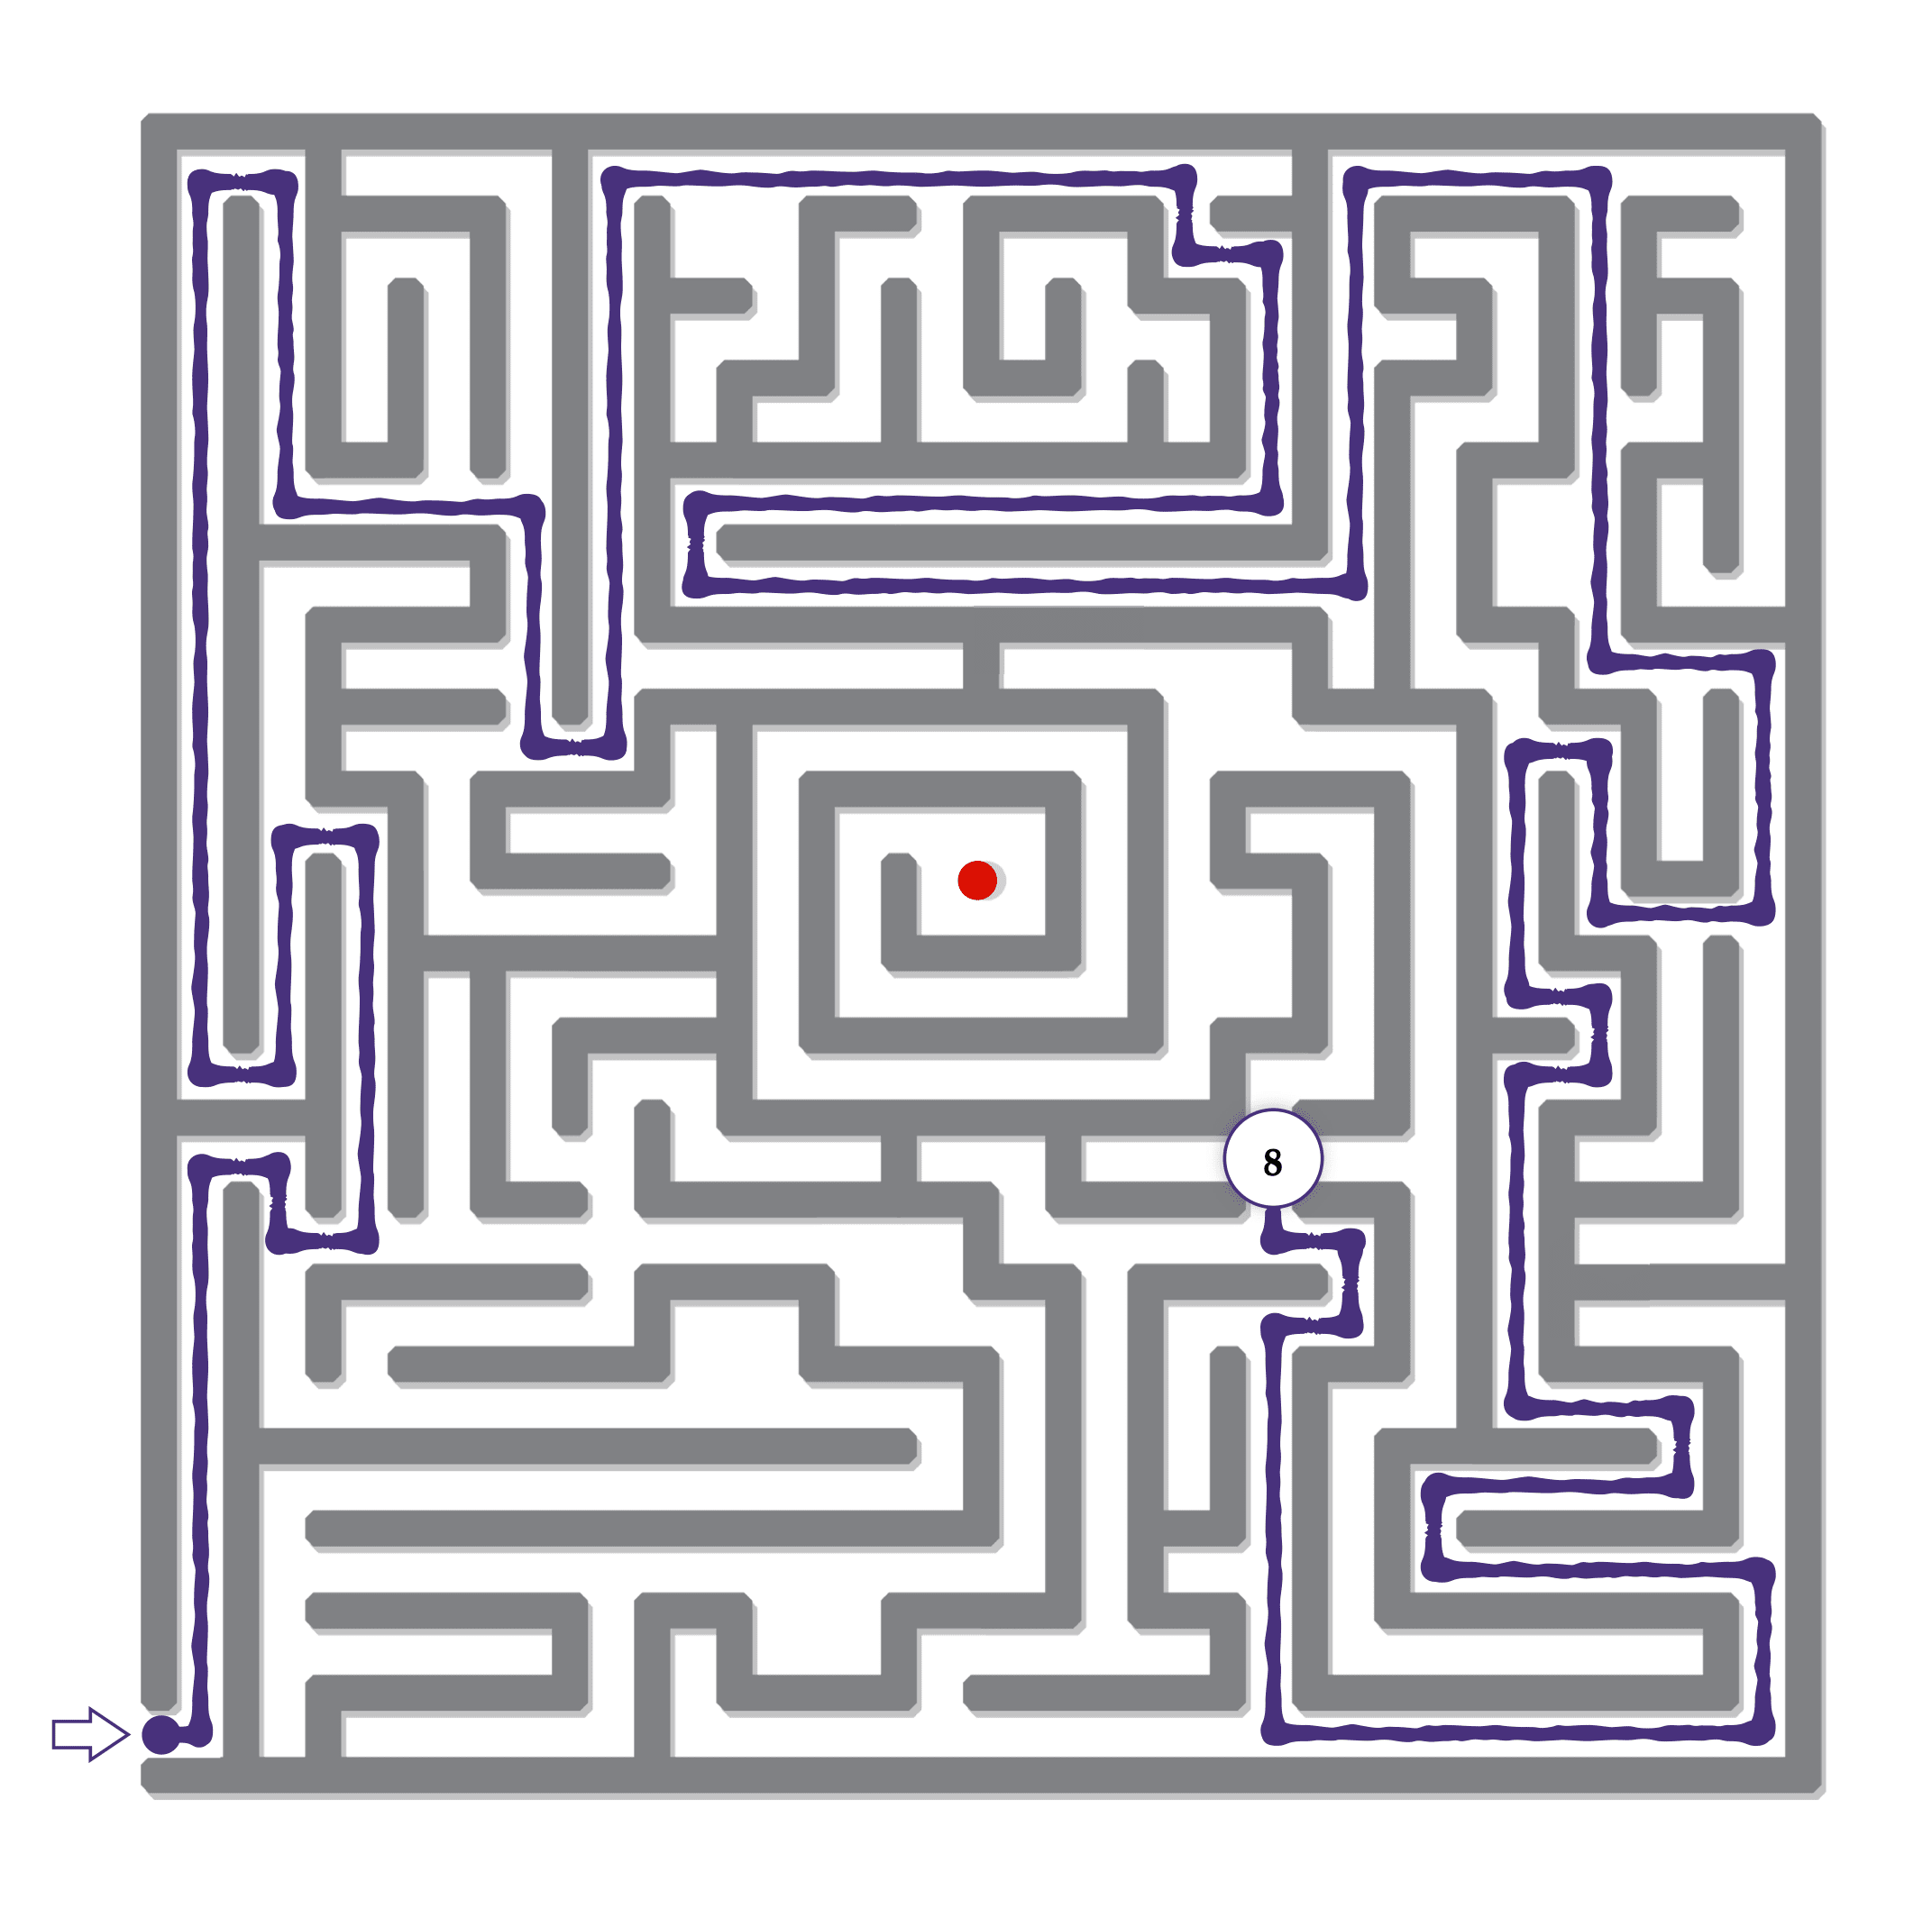 5345220 Maze step 8